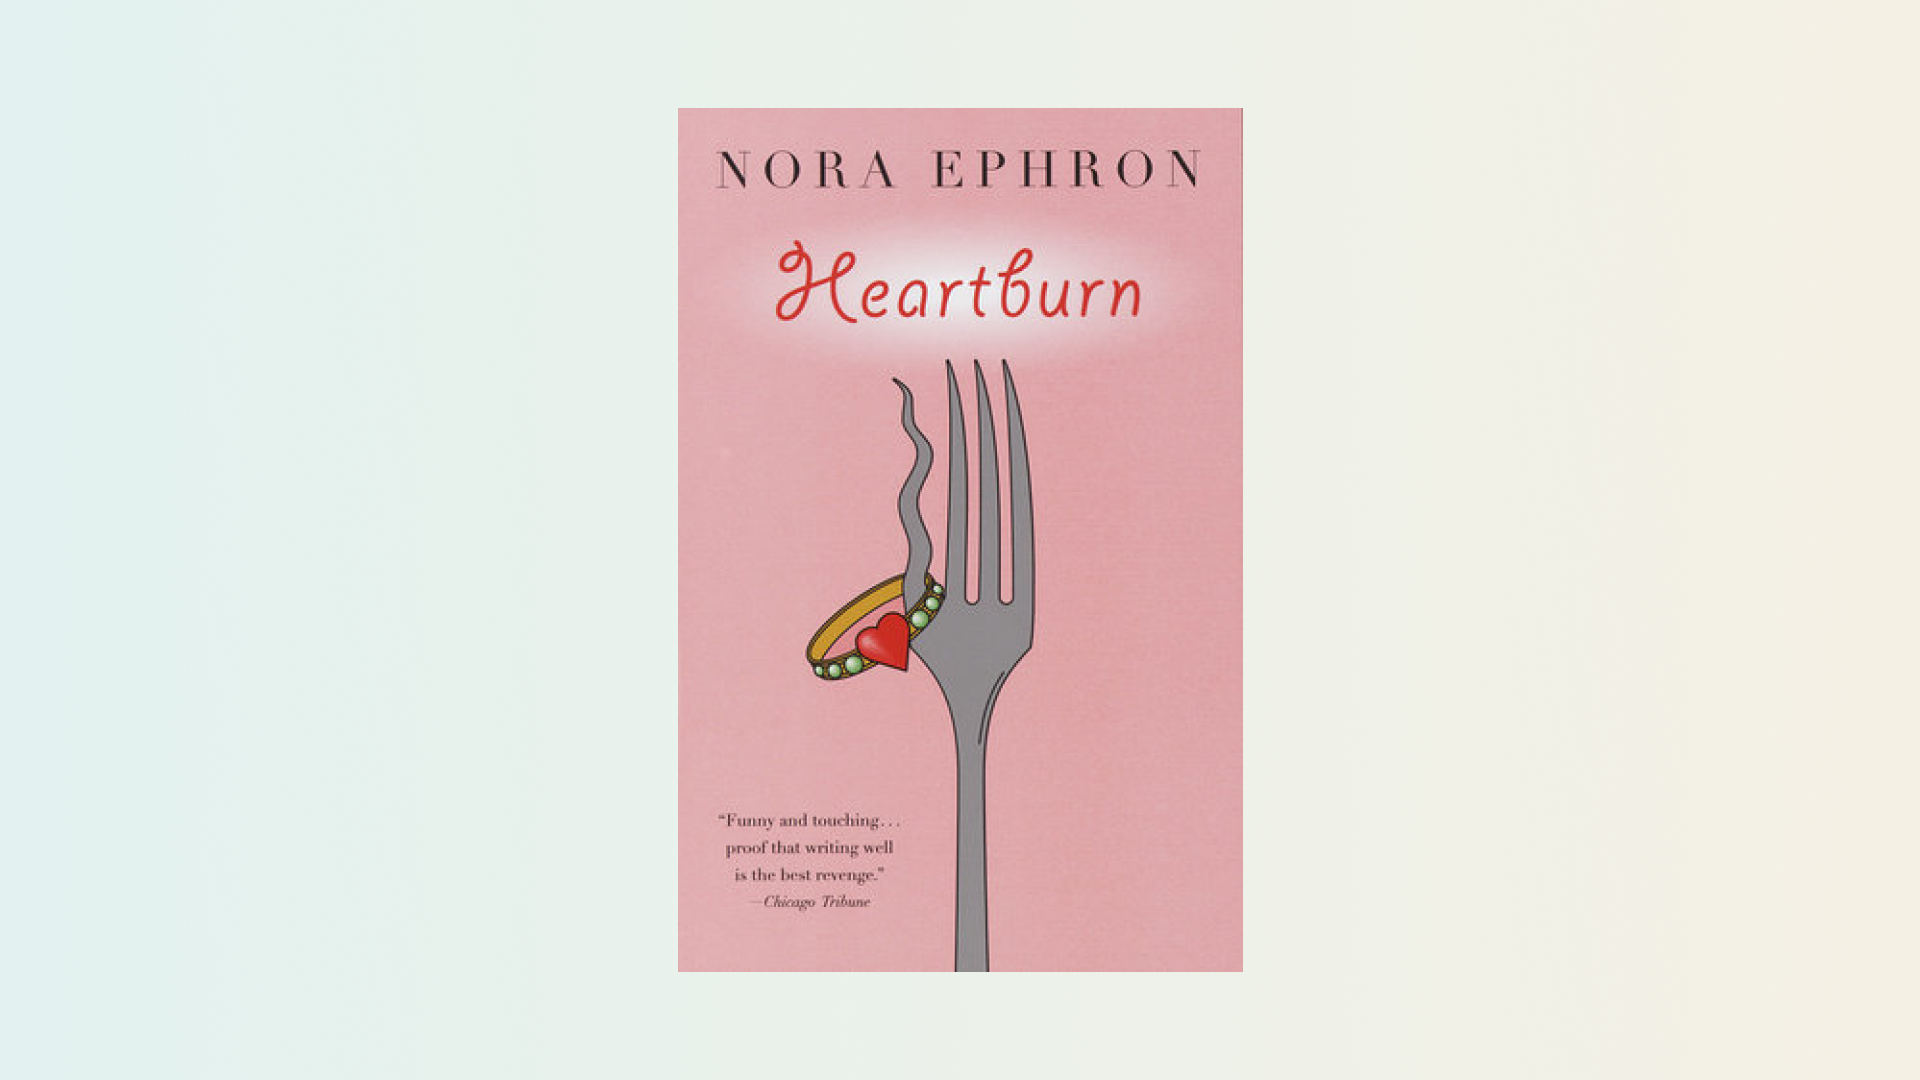 “Heartburn” by Nora Ephron